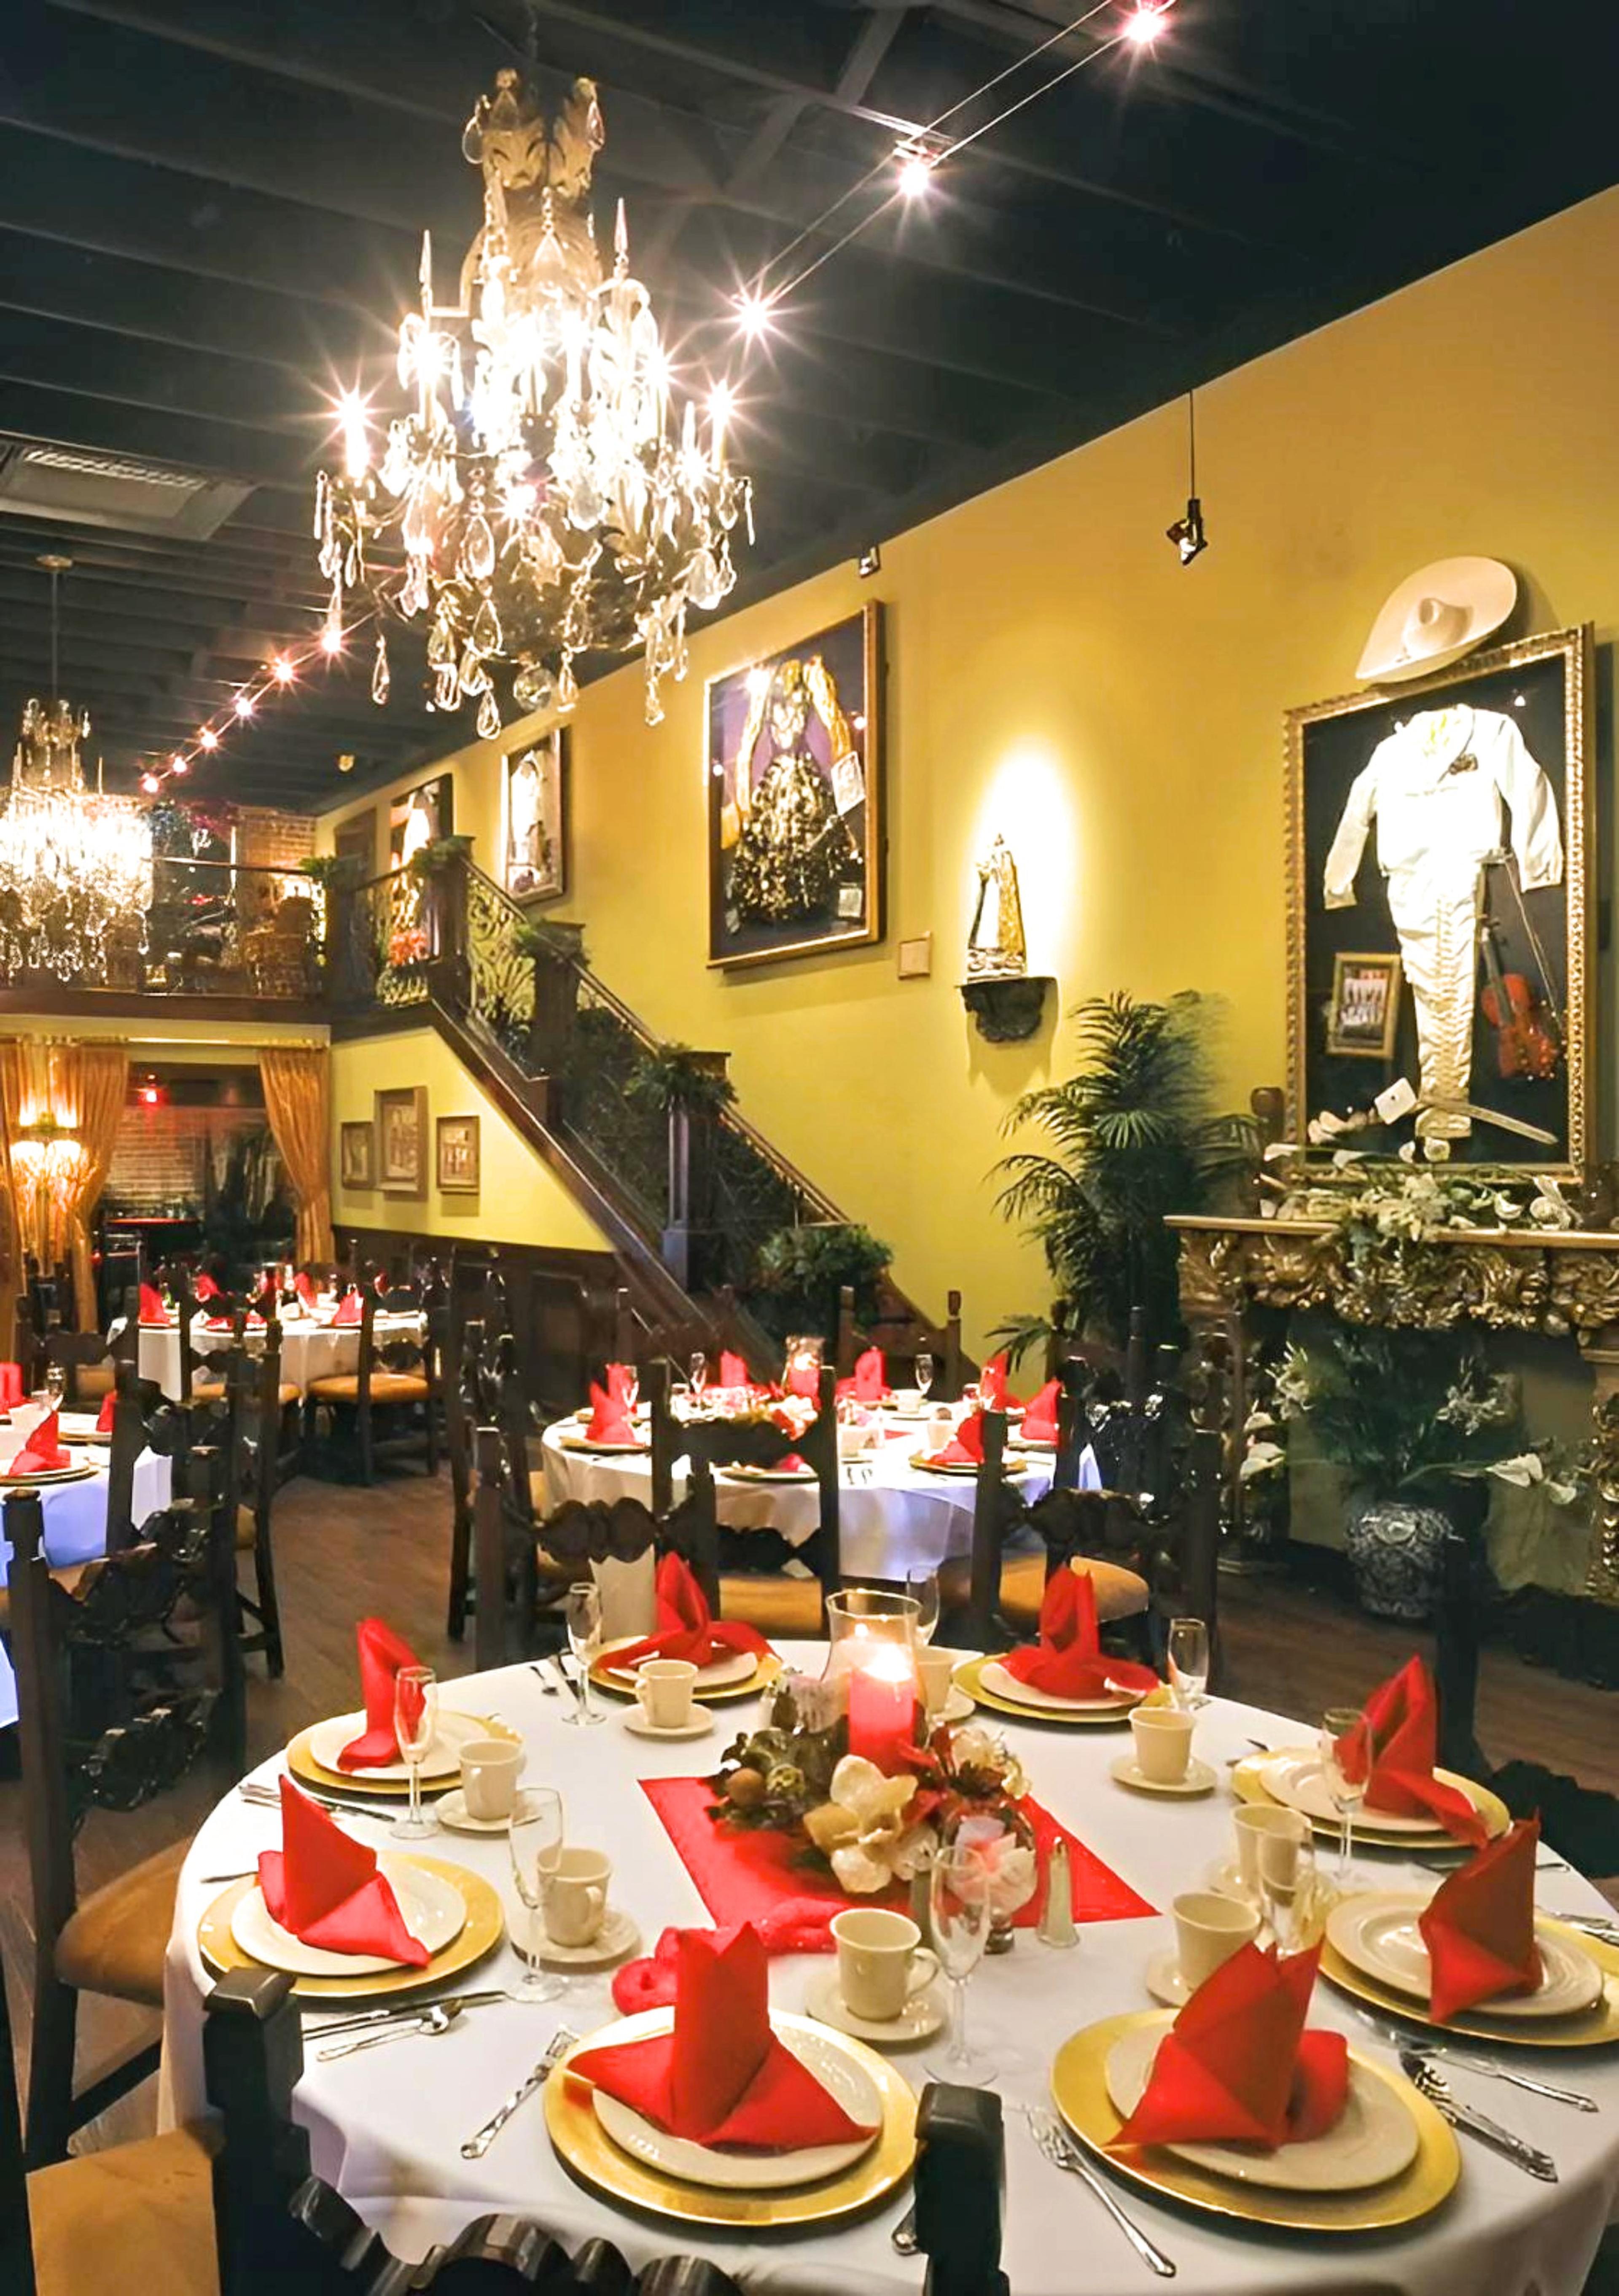 La Margarita Restaurant and Oyster Bar